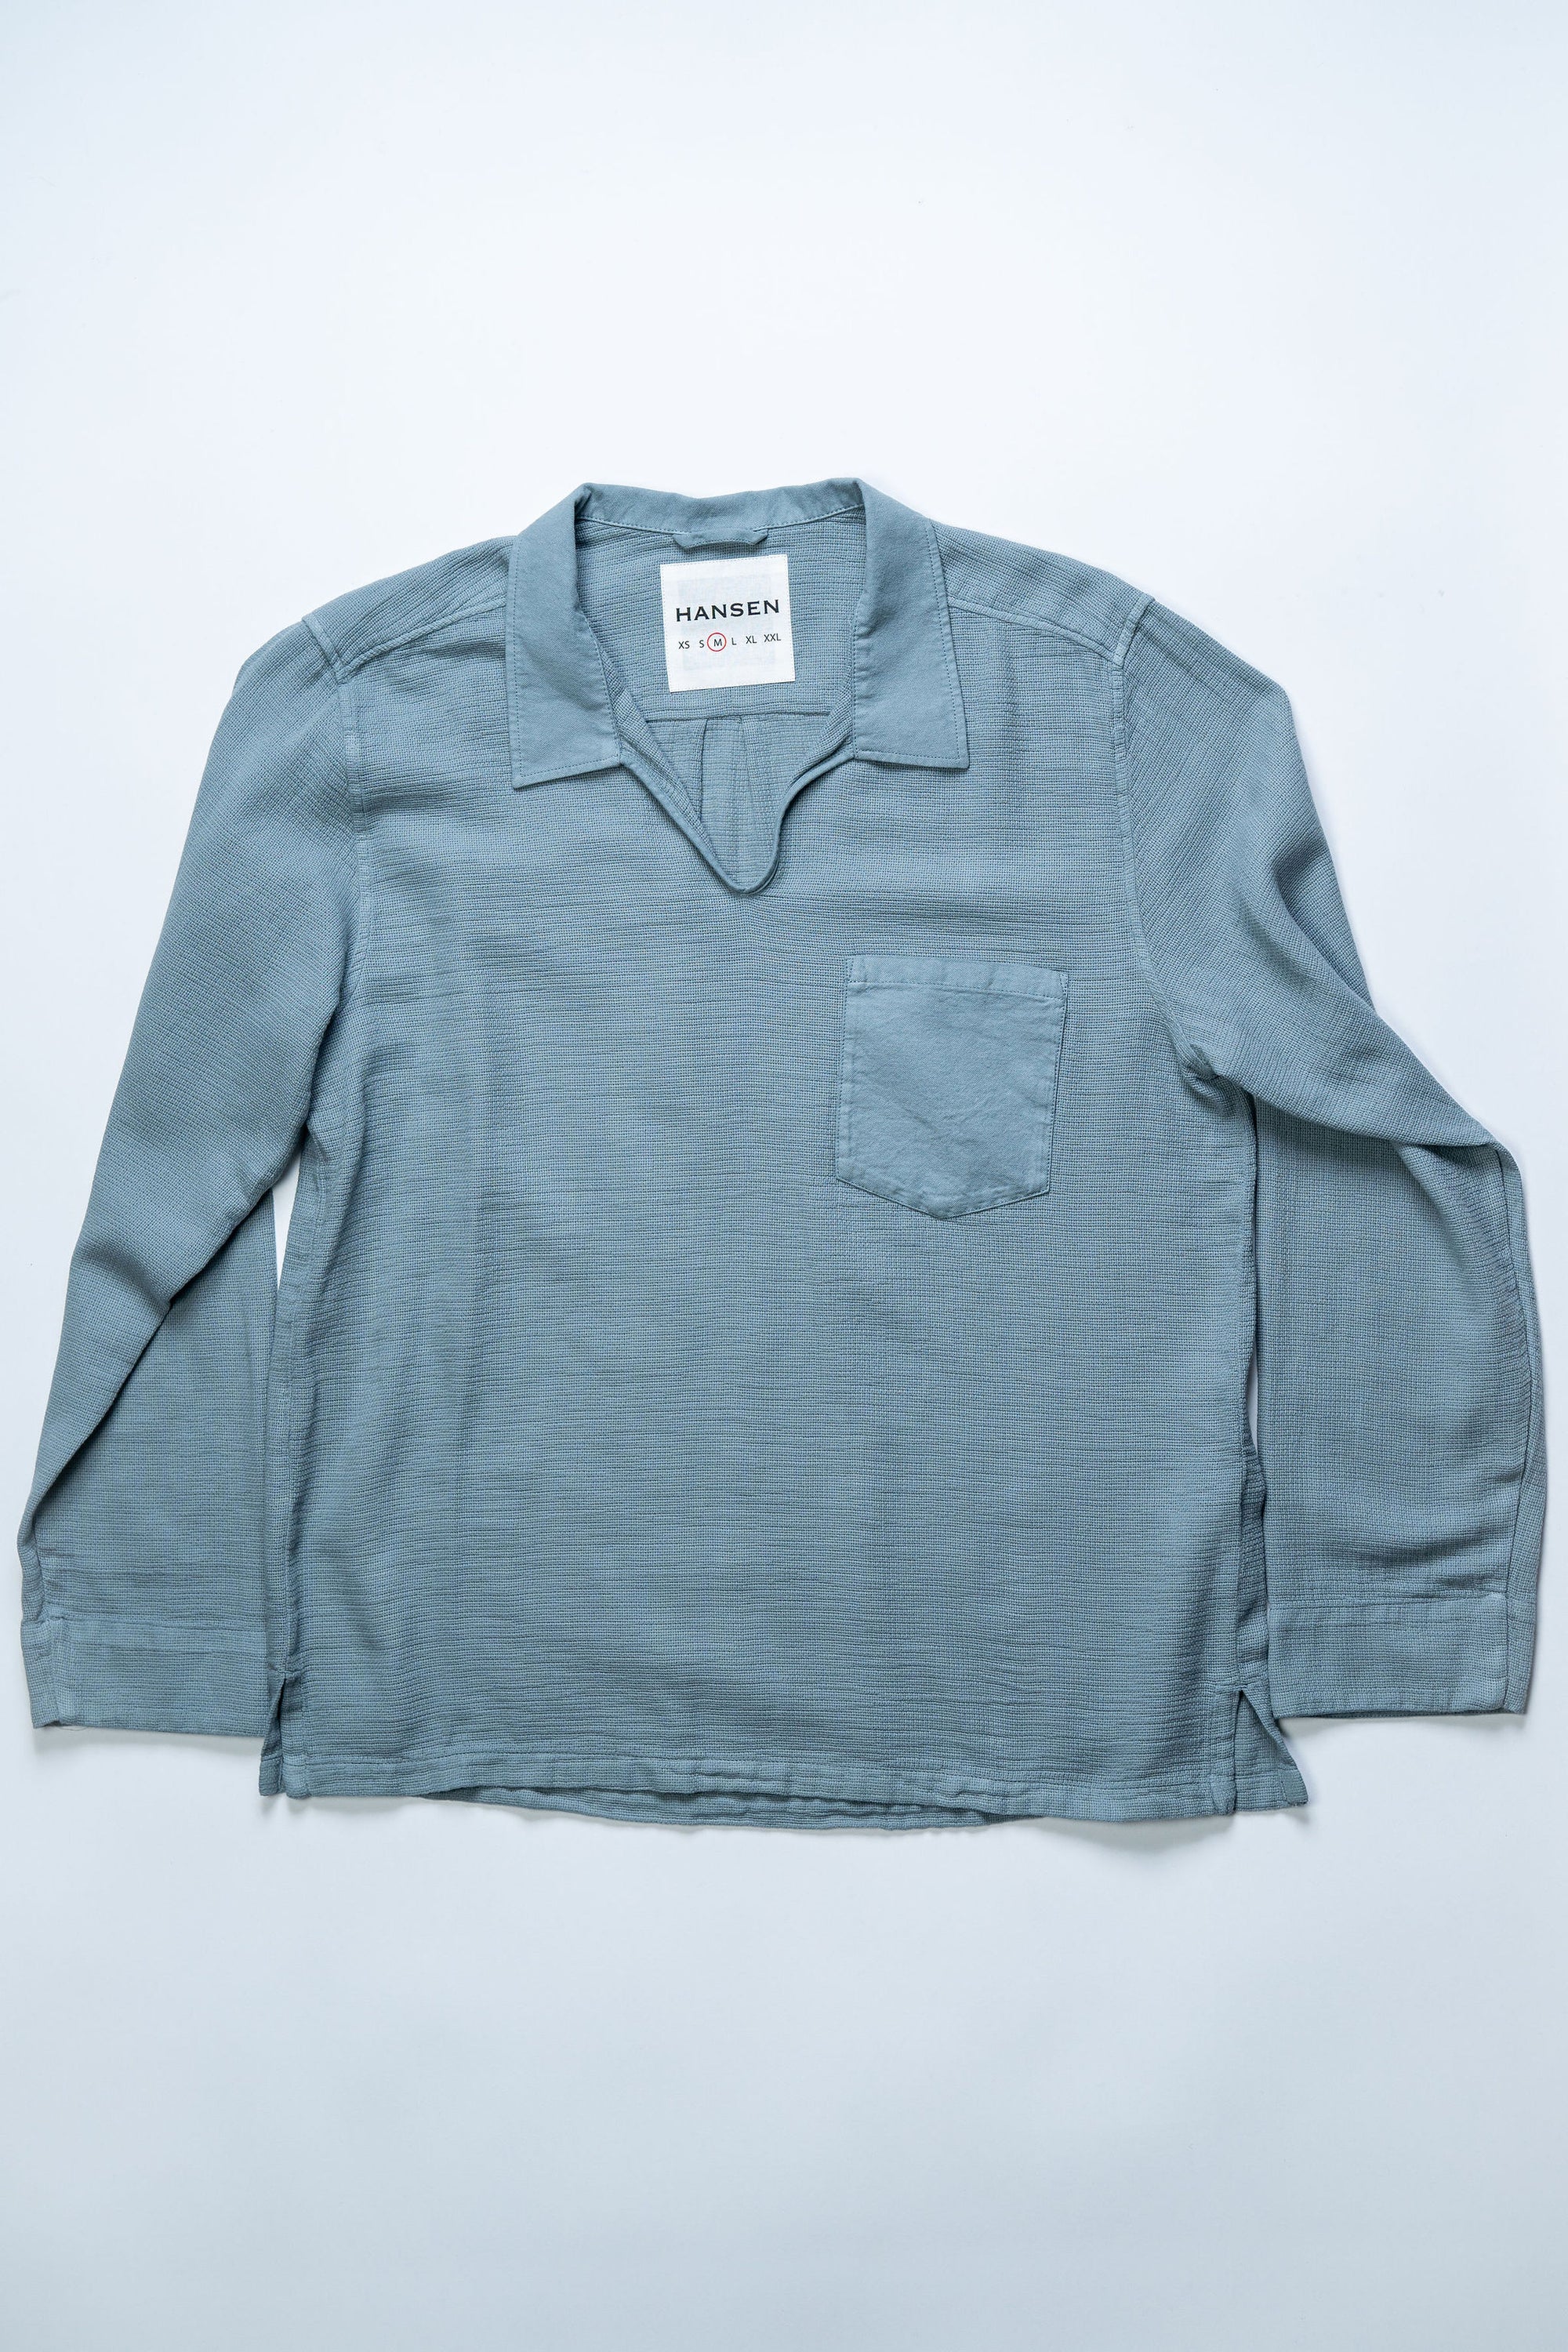 Hansen Garments Marius Casual Pull-on Shirt - Lagoon